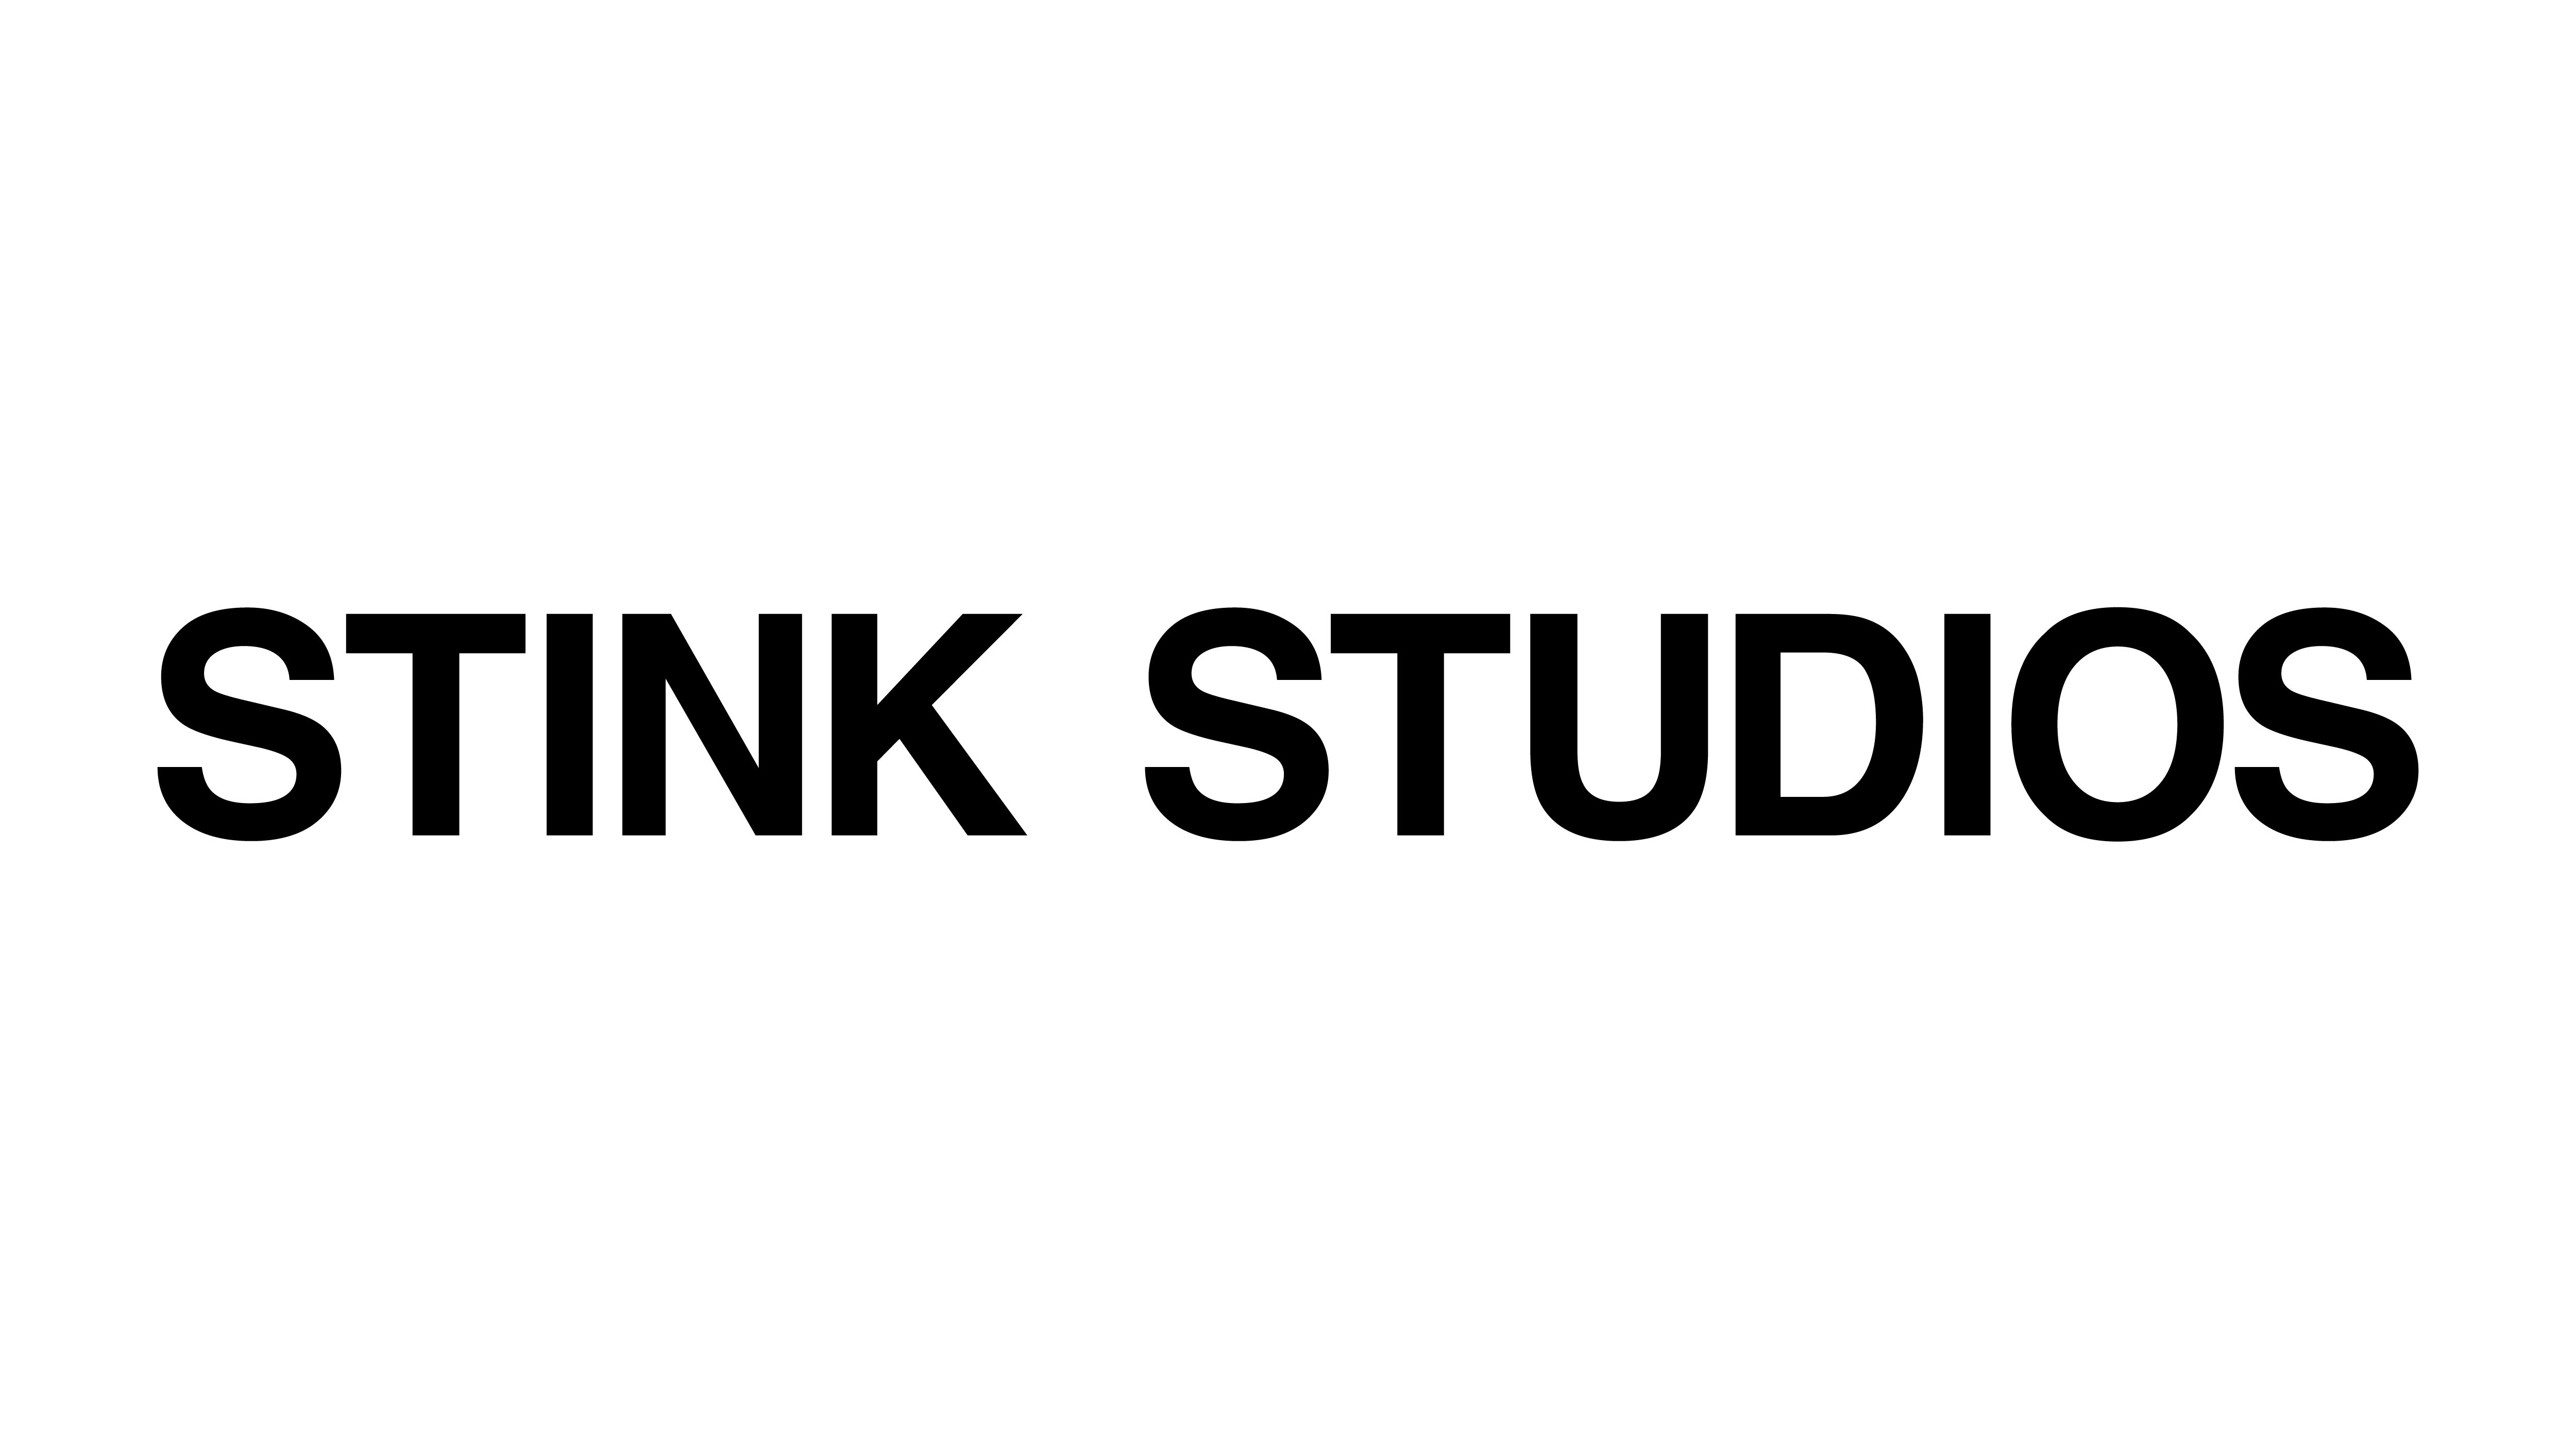 Stink Studios logo on white background.